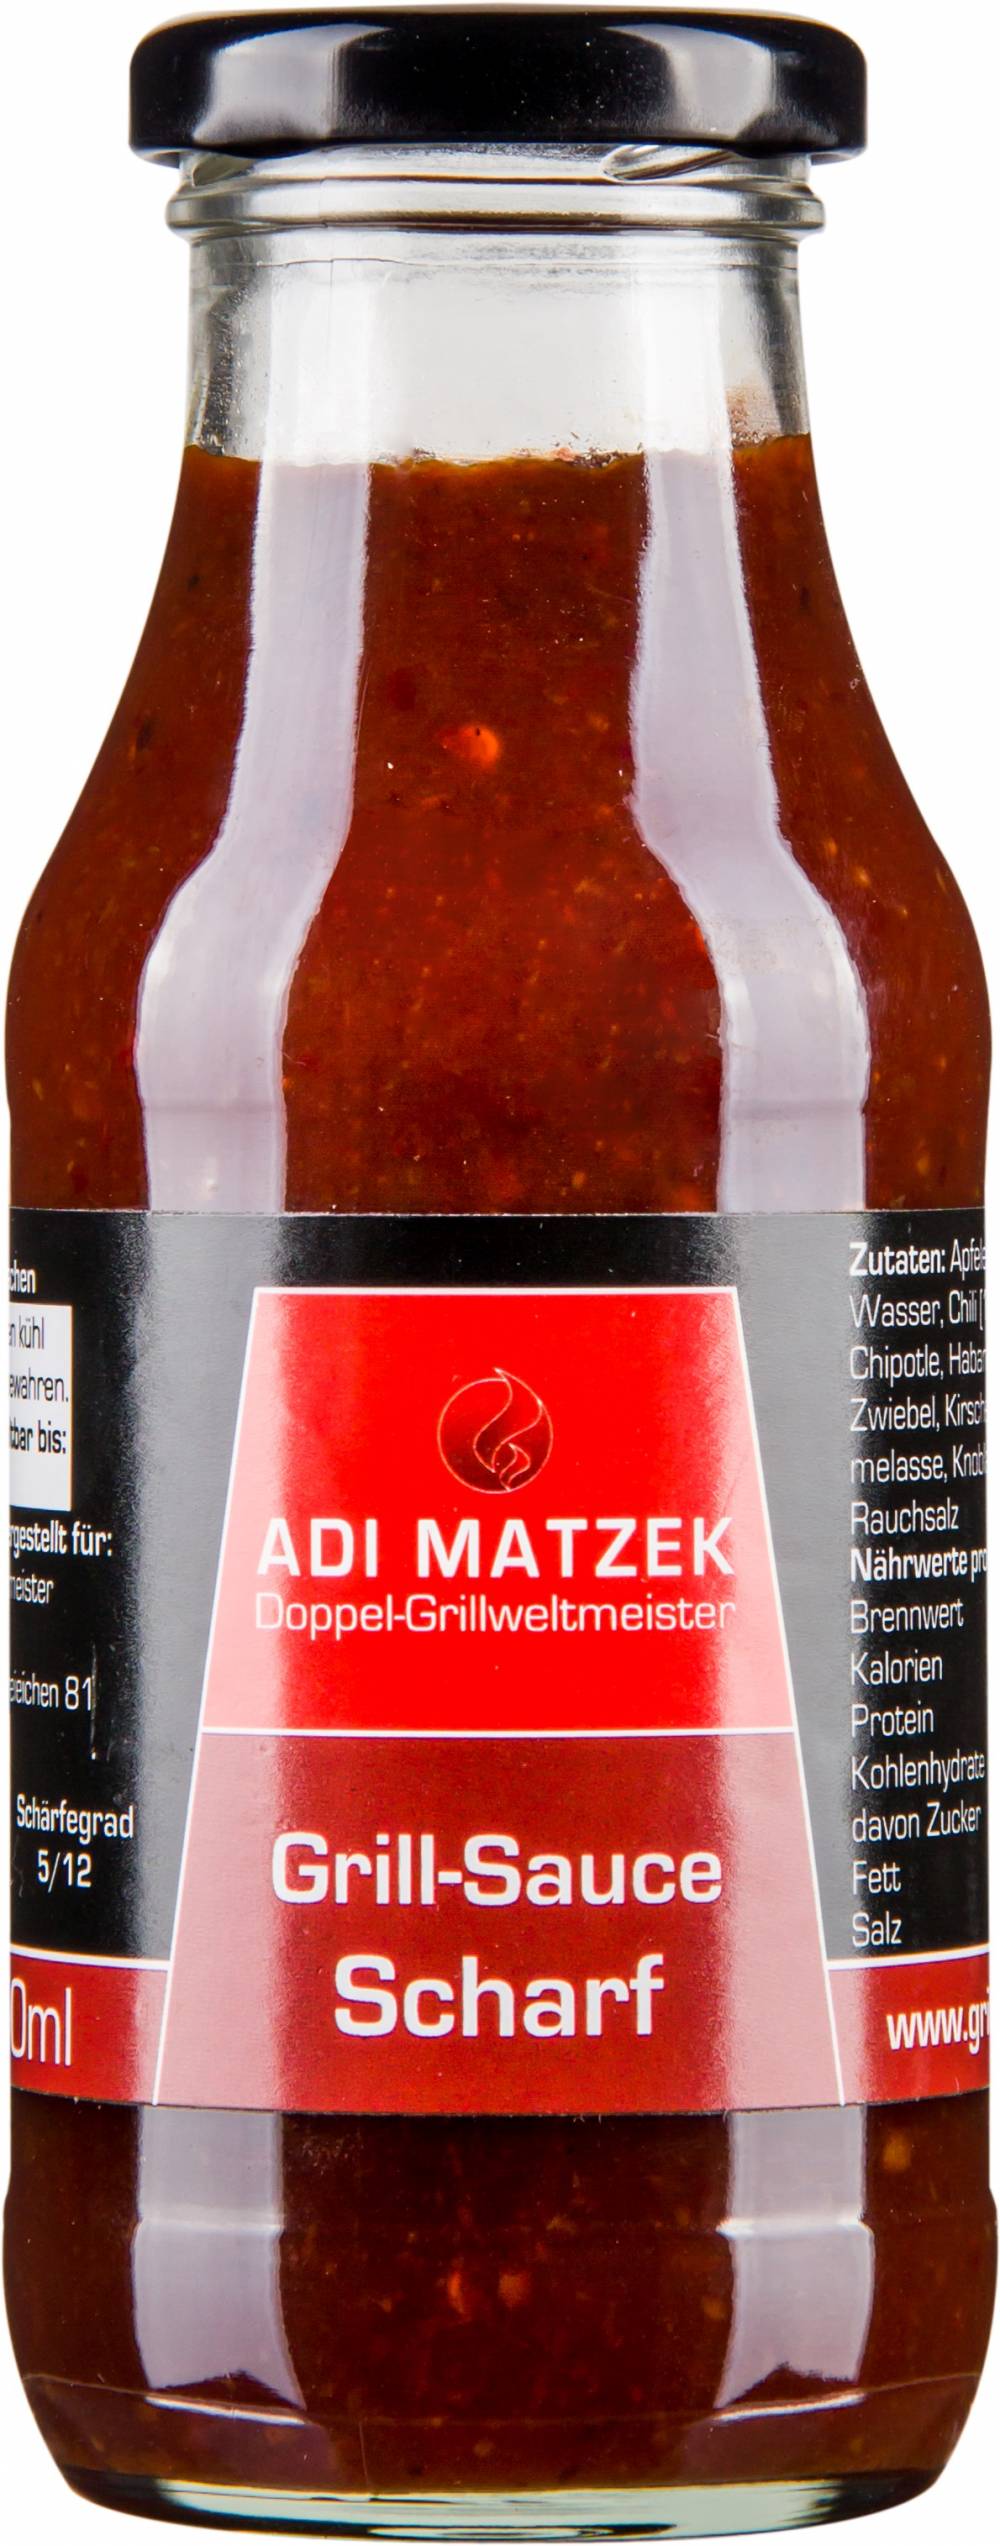 Adi Matzek Grill-Sauce Scharf 250ml 